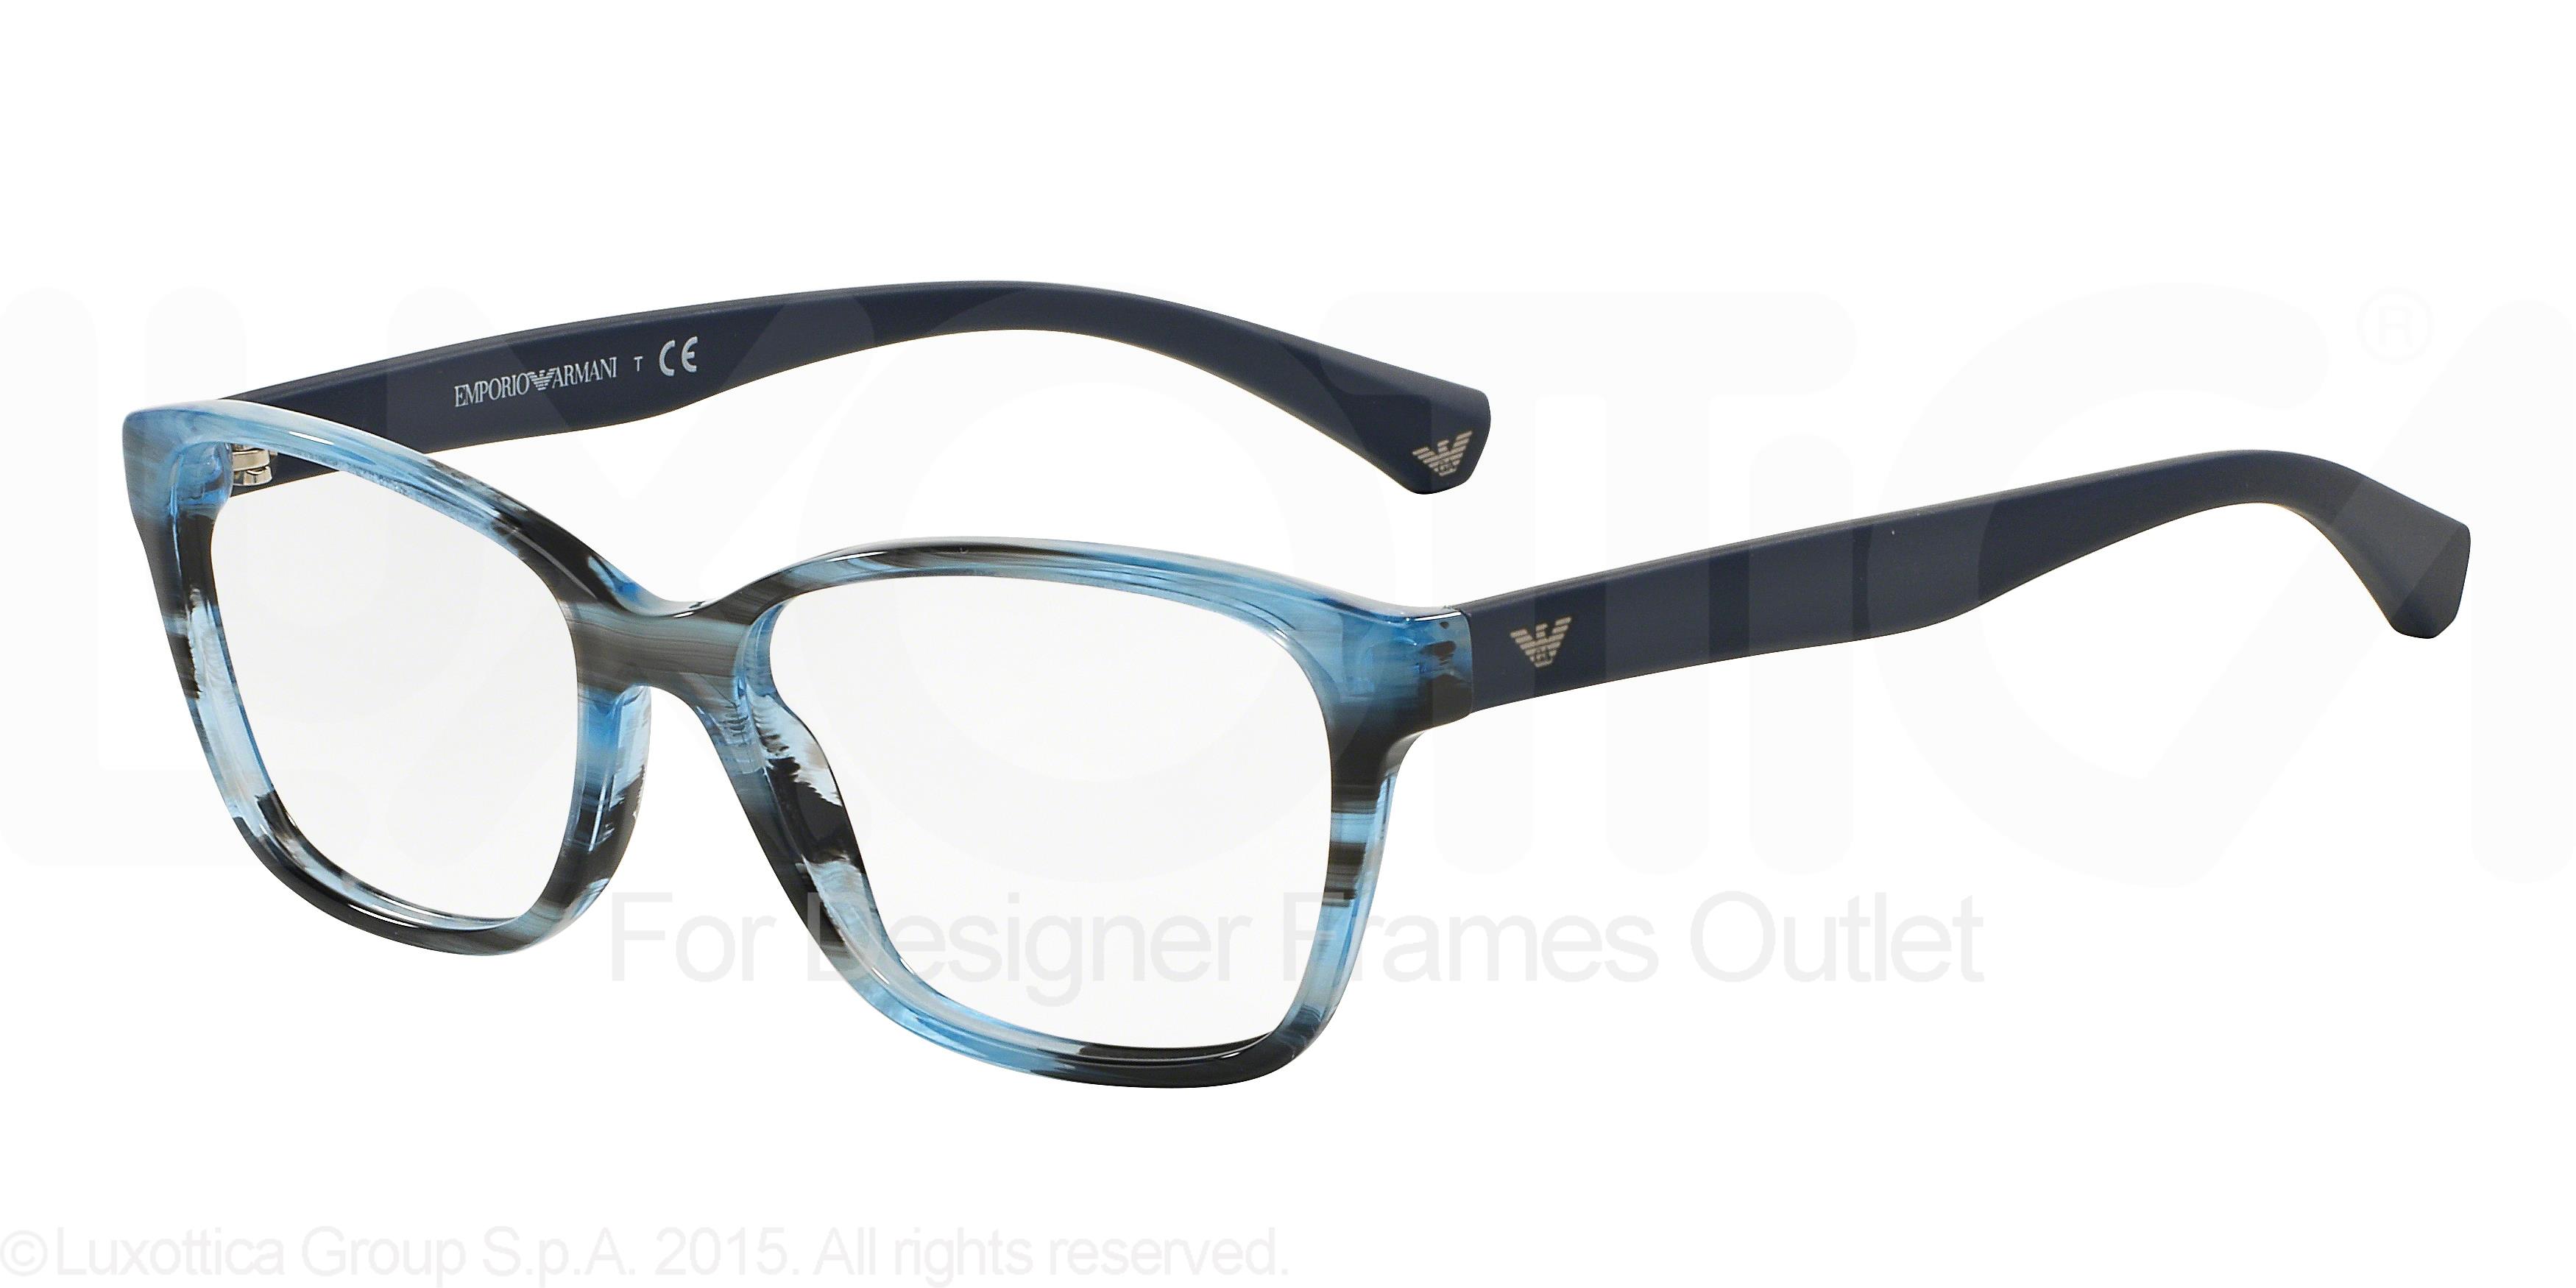 Picture of Emporio Armani Eyeglasses EA3060